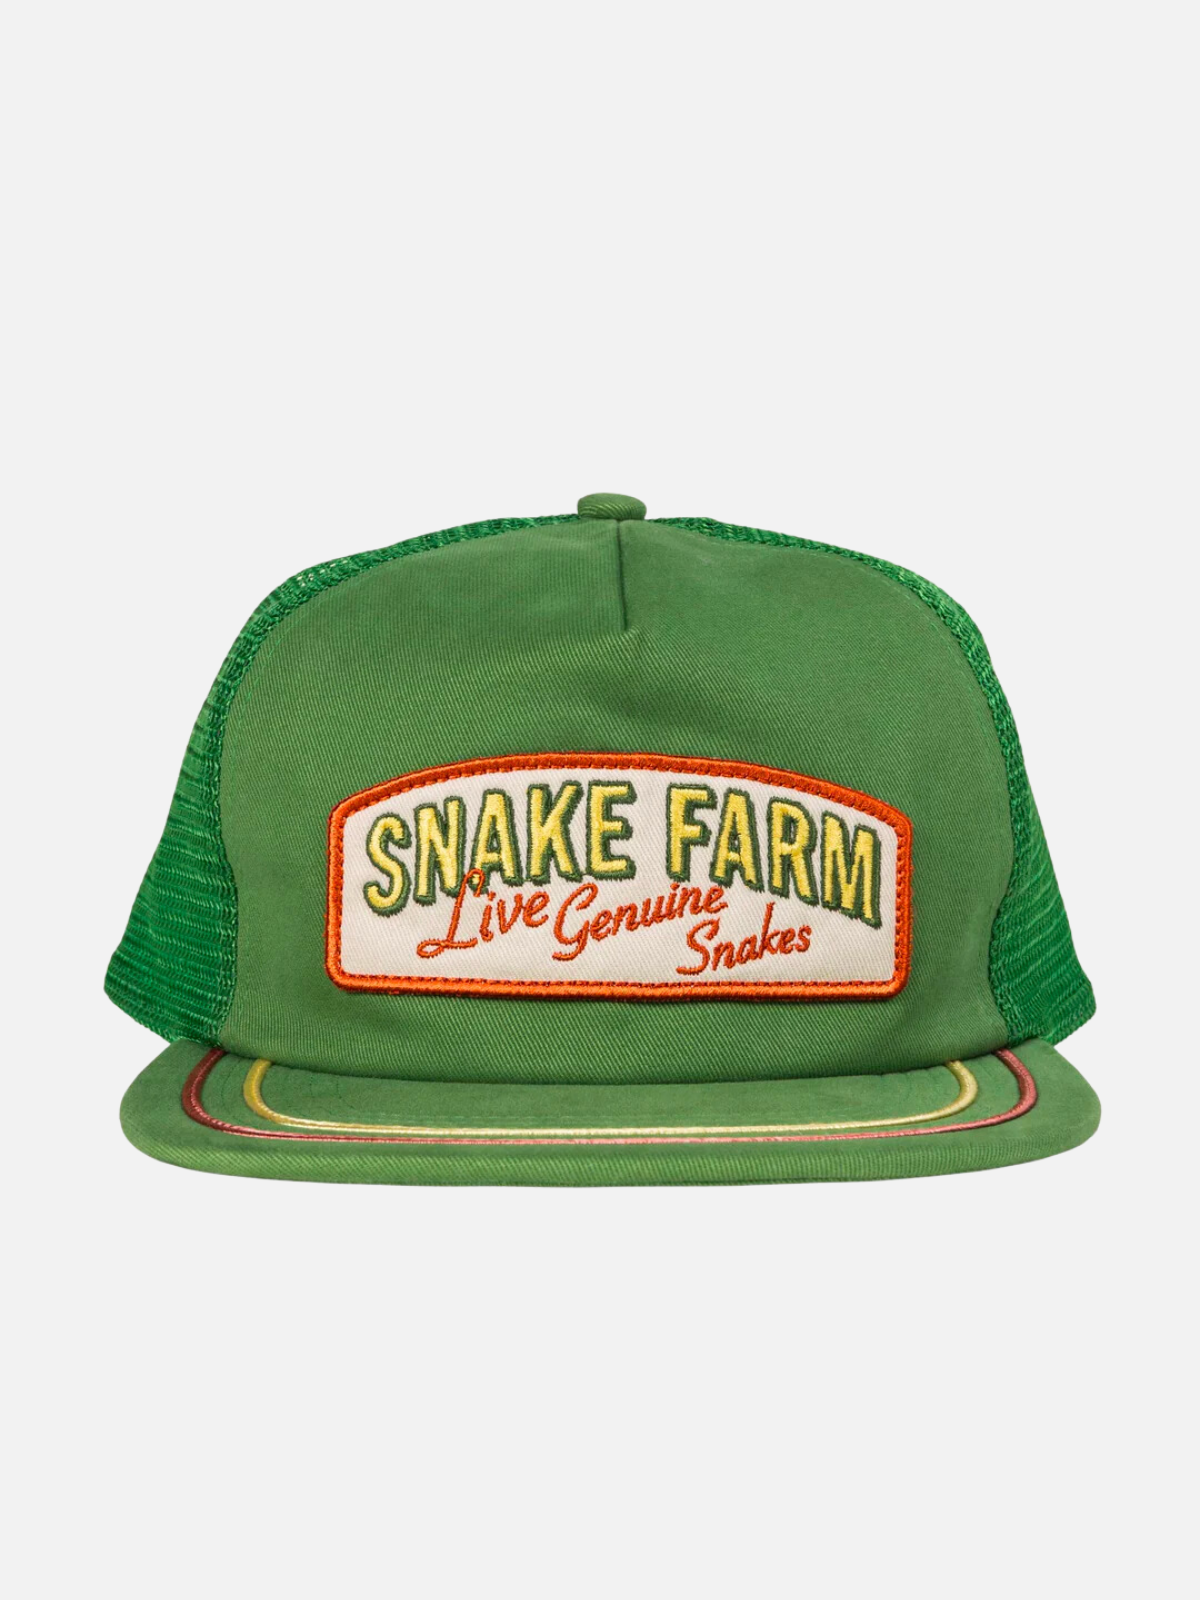 sendero snake farm hat embroidered patch trucker cap mesh backing green yellow white red kempt athens ga georgia men's clothing store